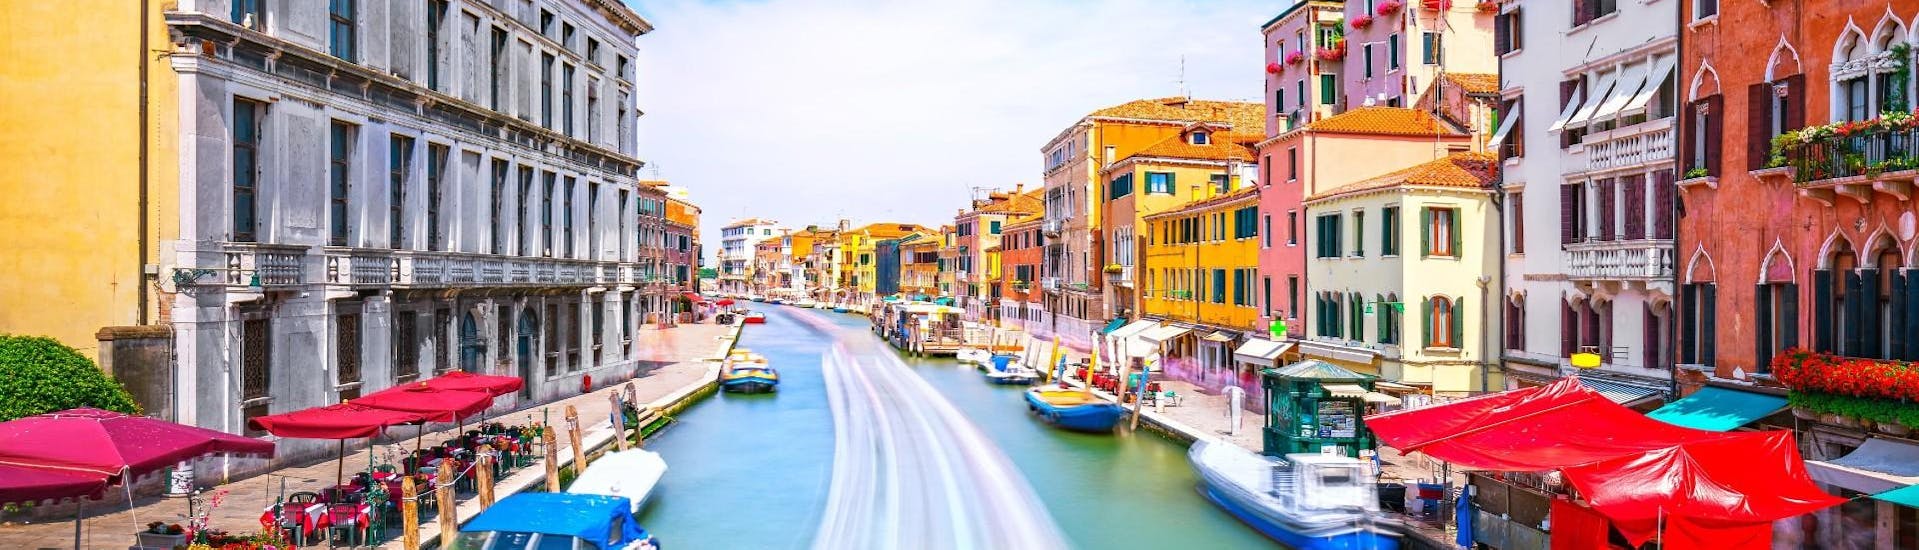 Giro in barca nel Canal Grande e canali nascosti a Venezia.